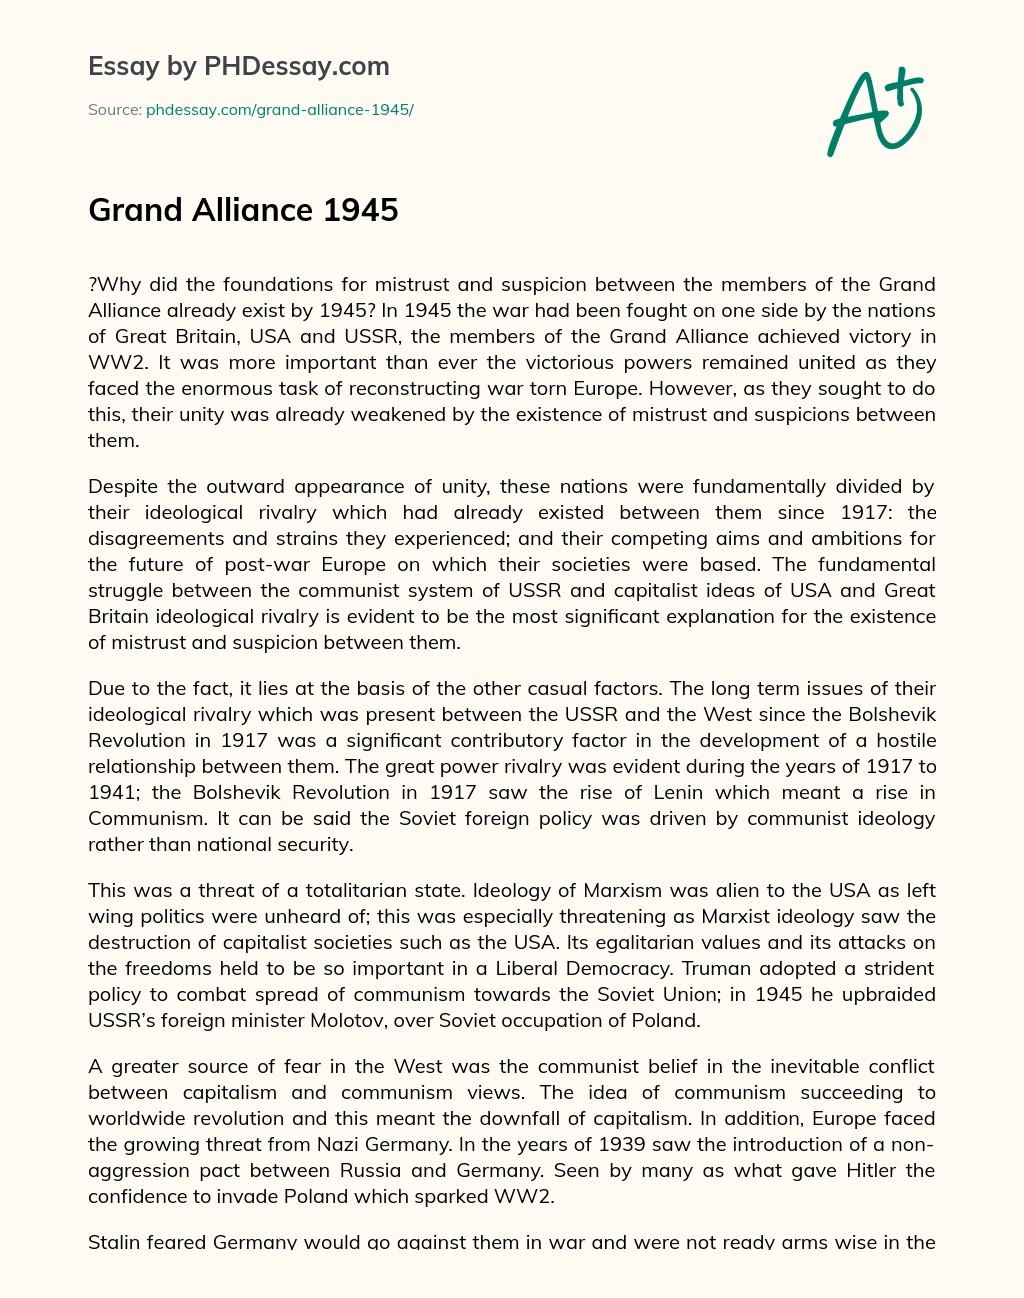 Grand Alliance 1945 essay